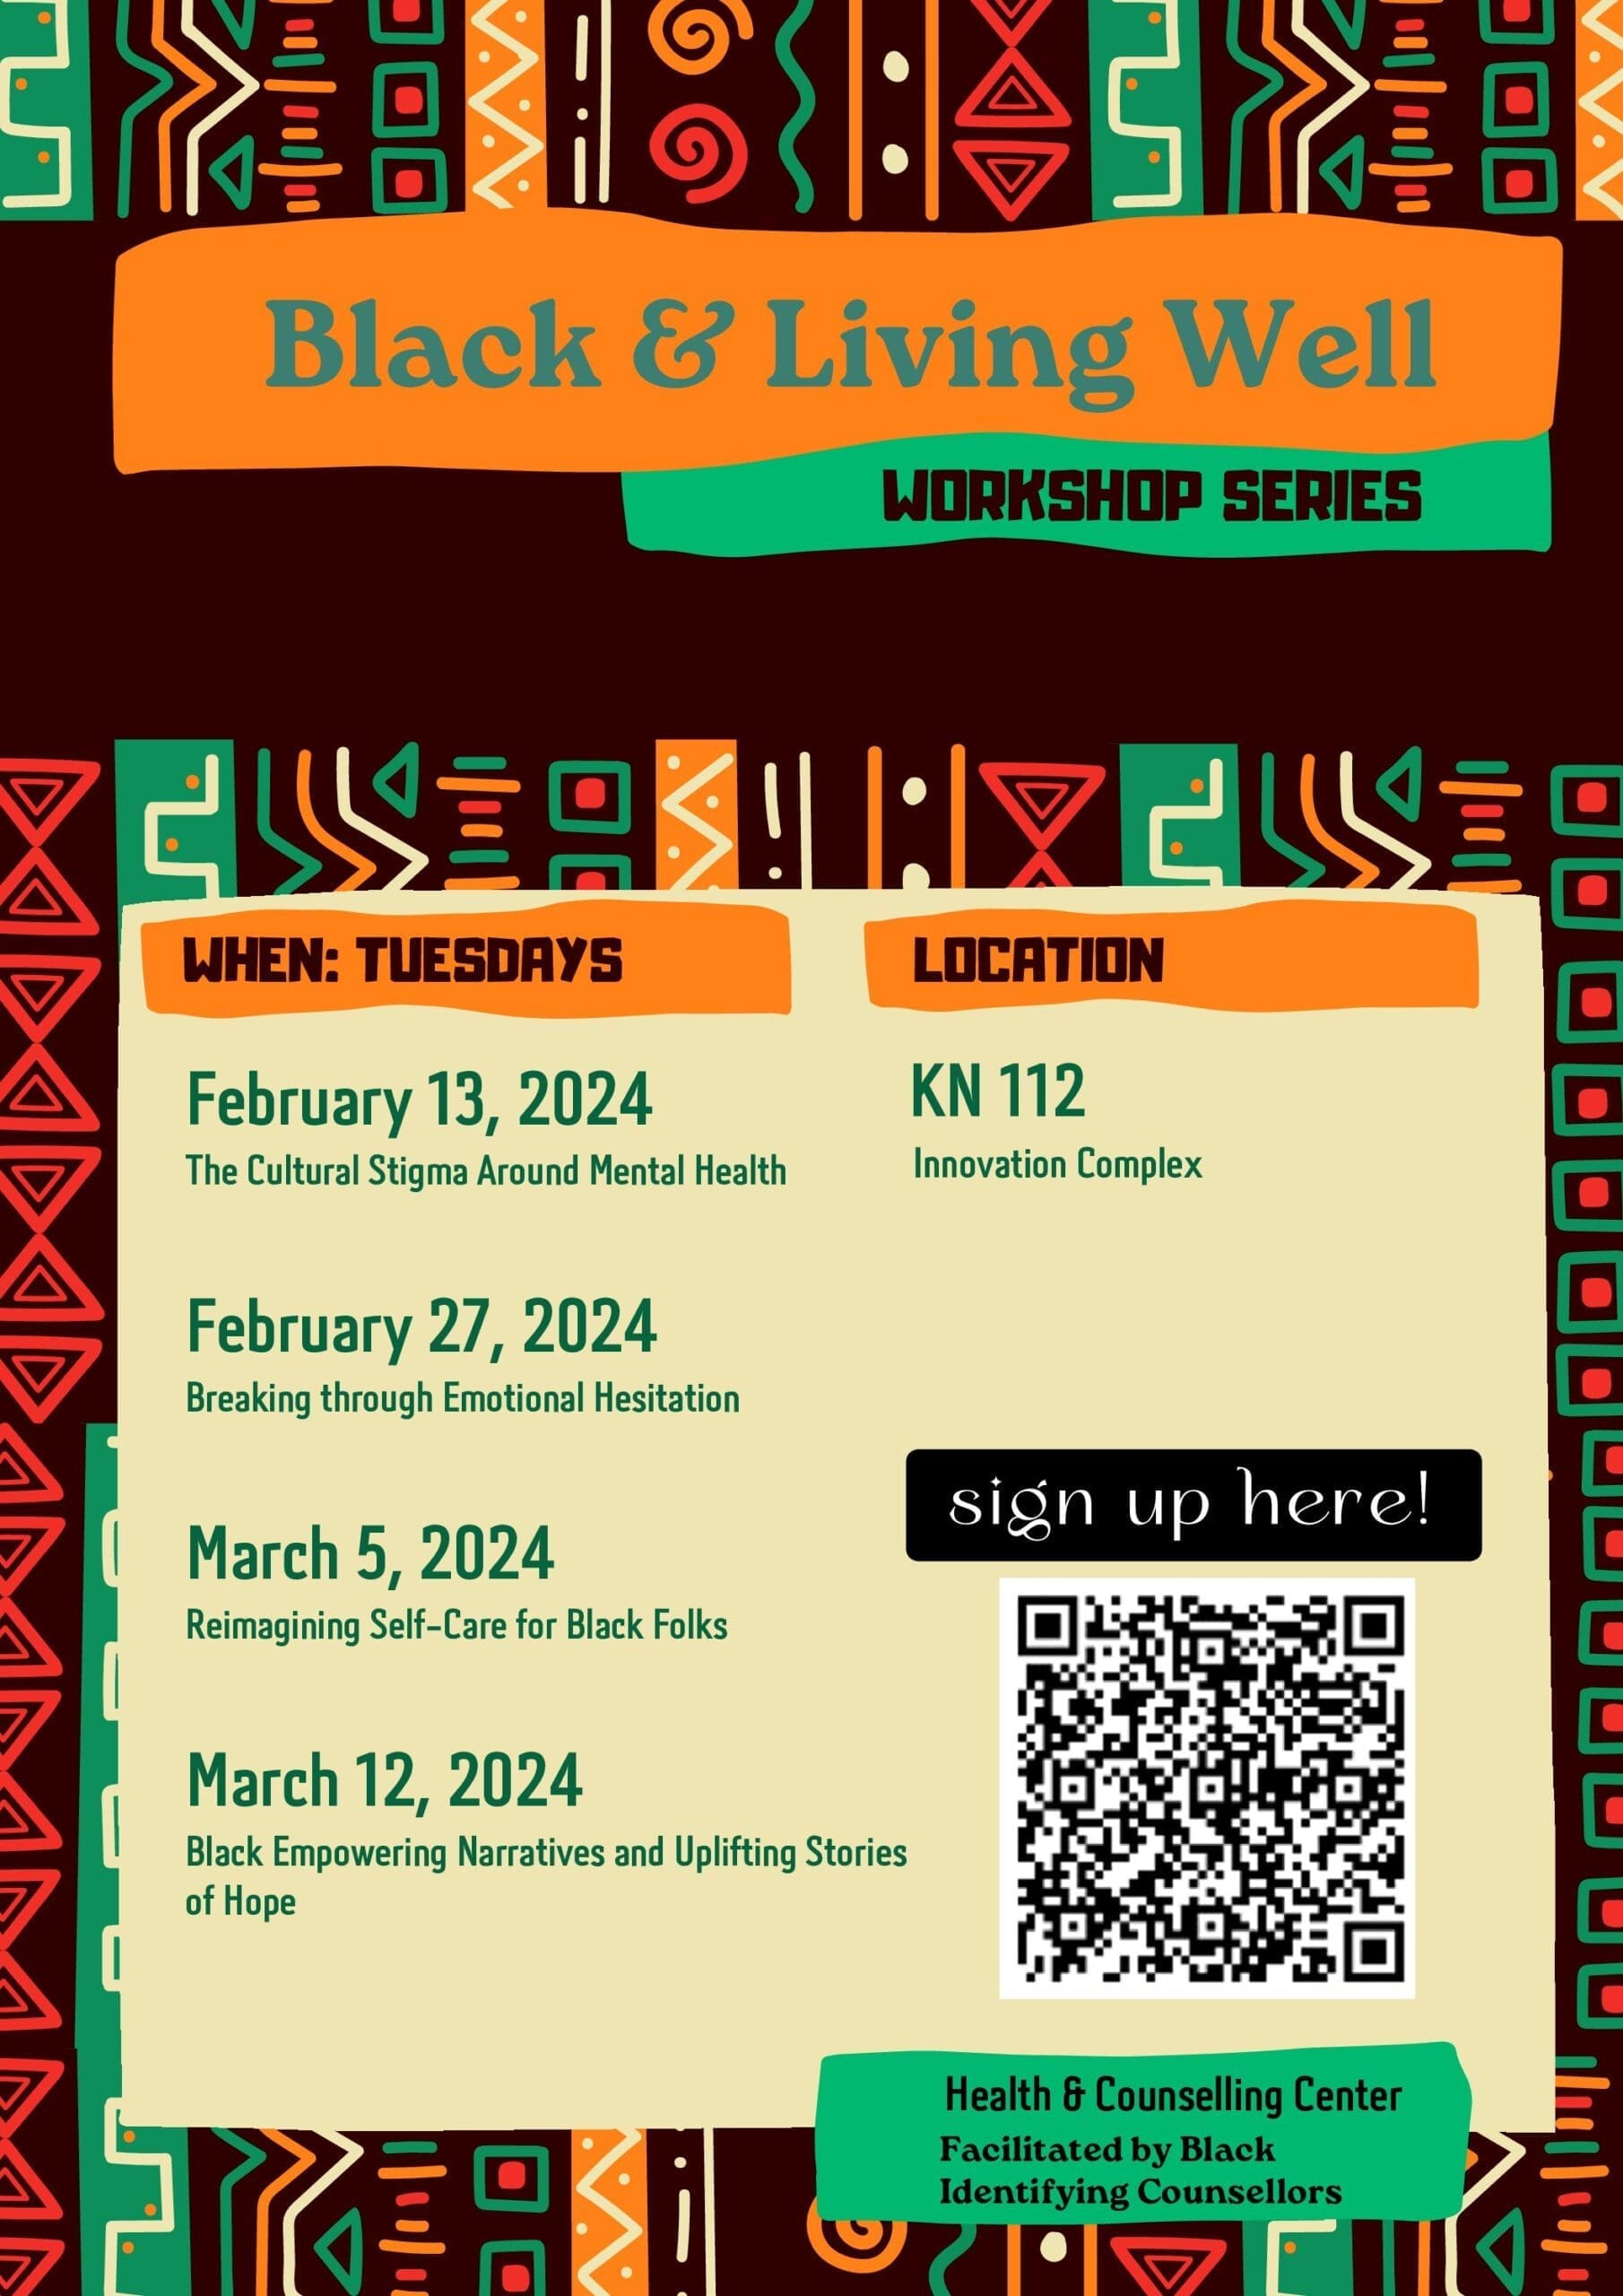 Black and Living Well Workshop Series Details